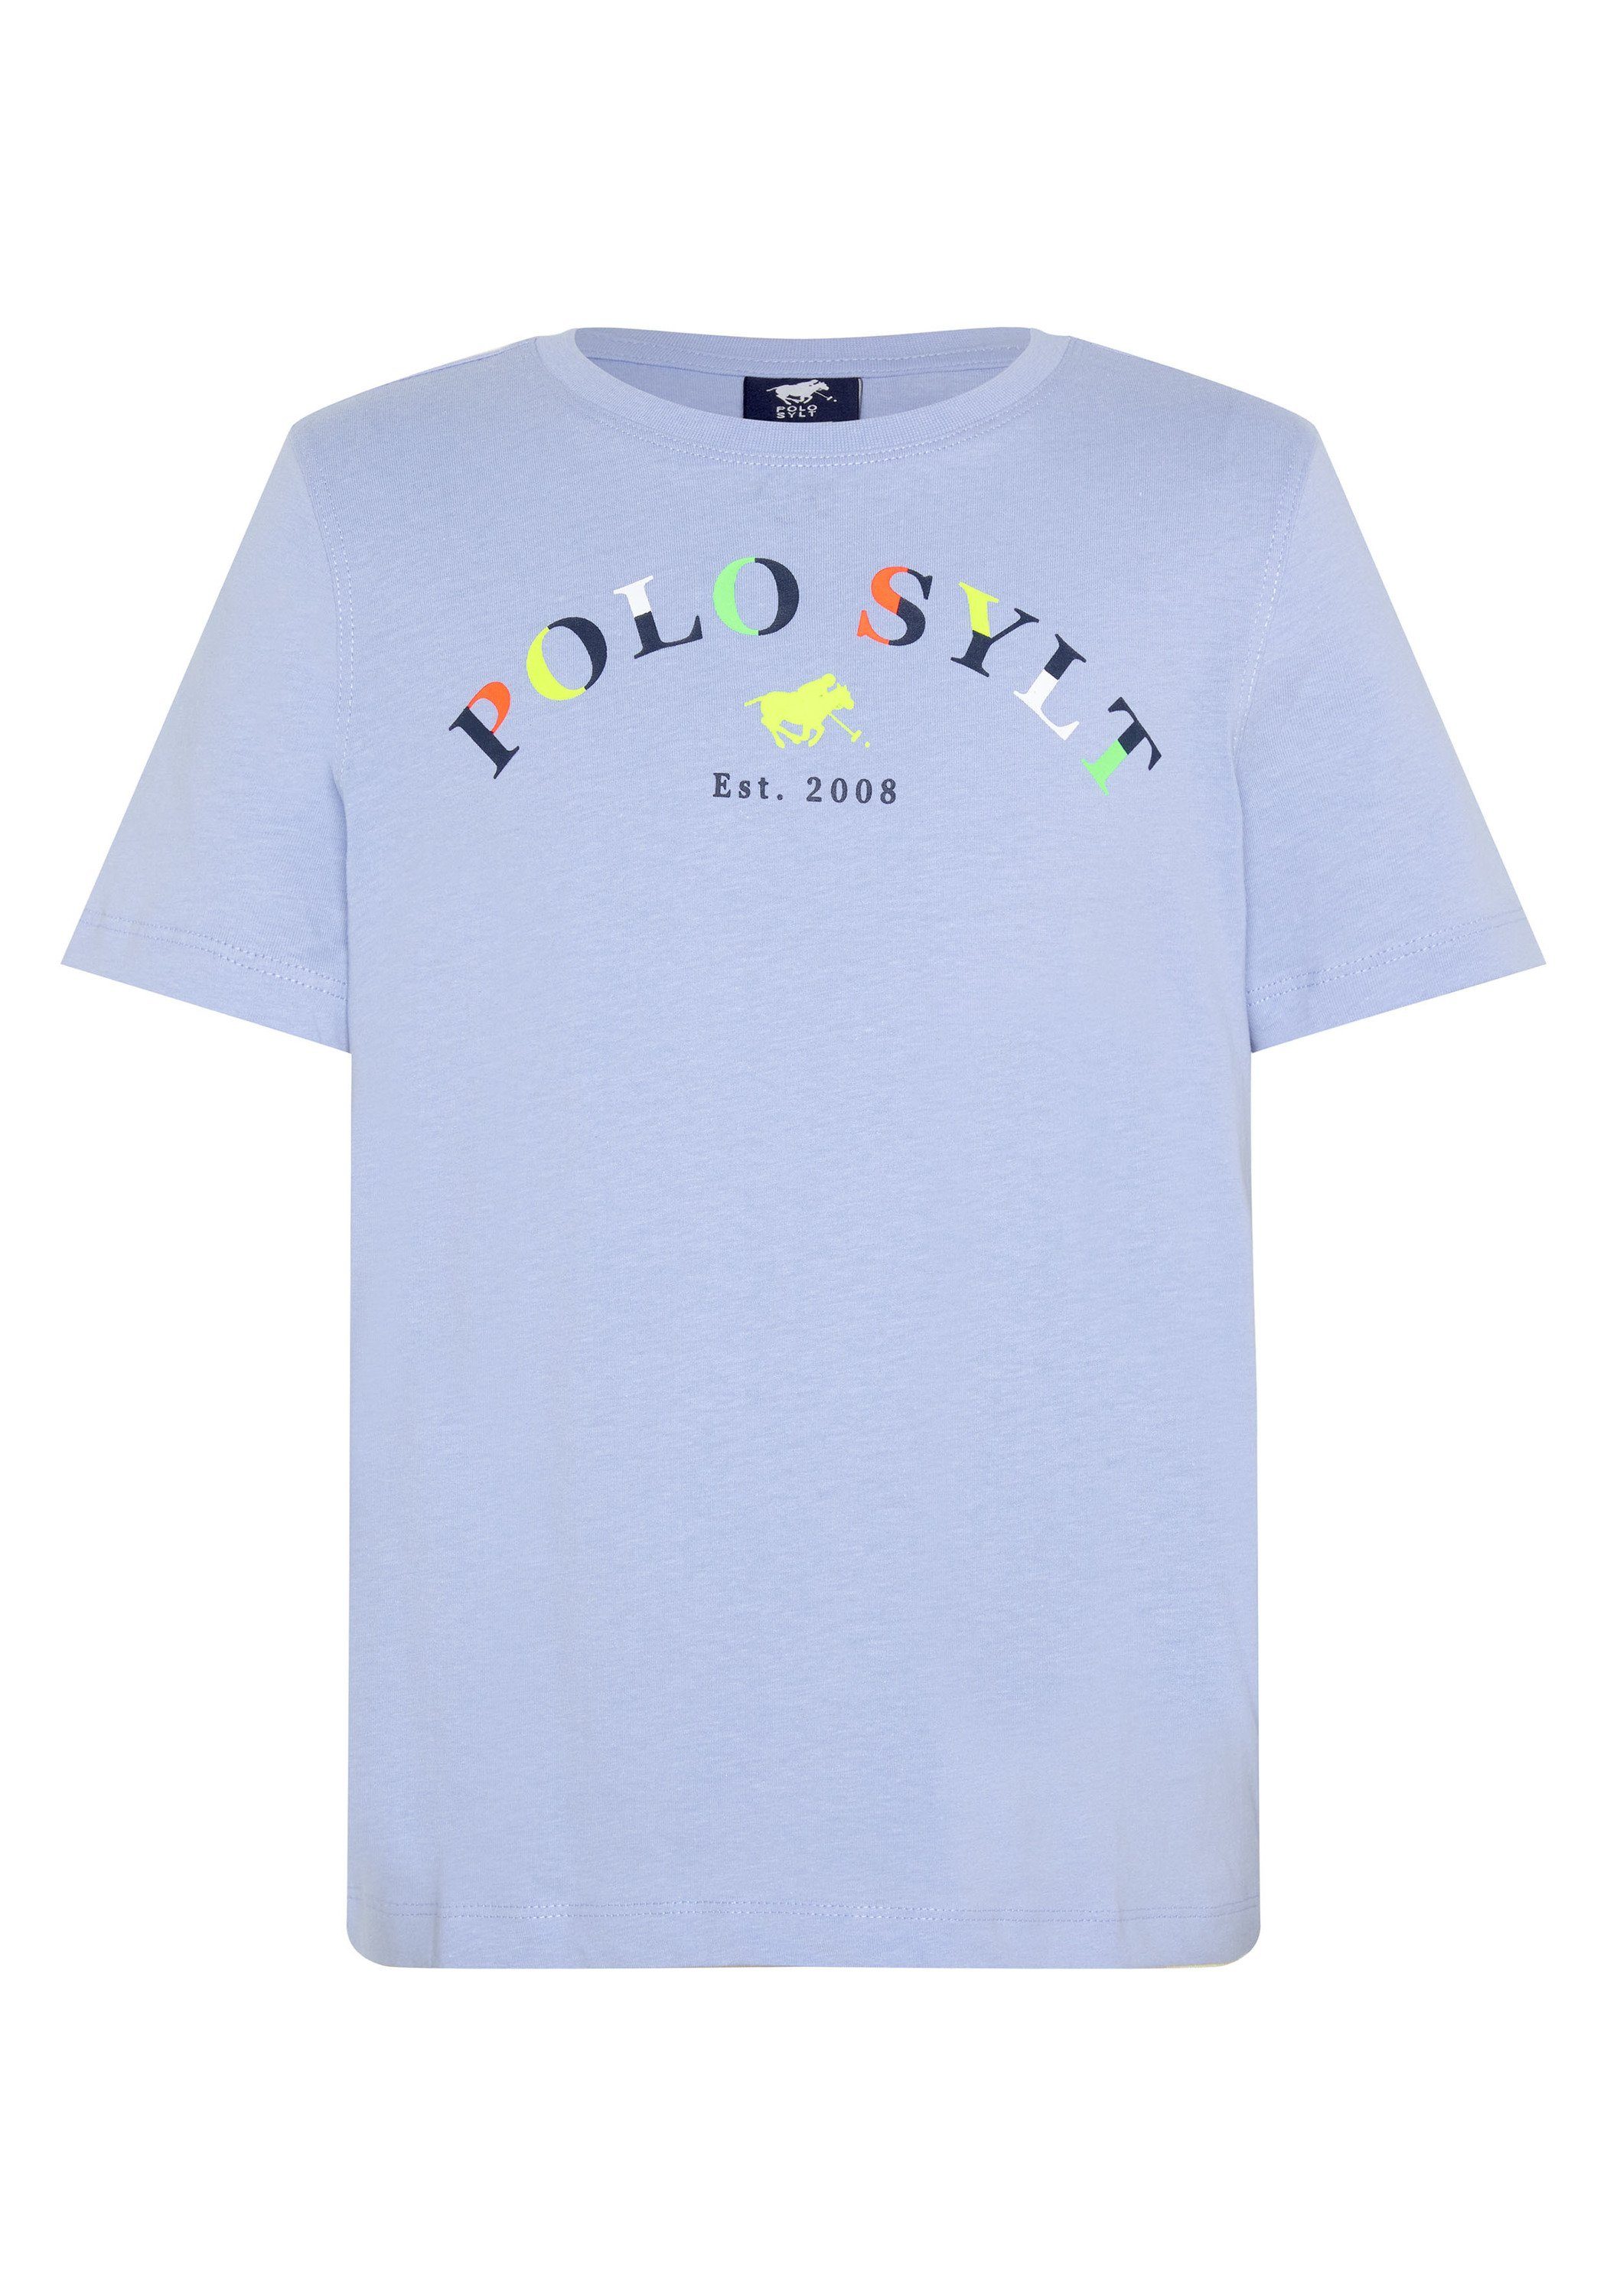 Brunnera Logoprint mit Blue Print-Shirt Sylt 16-3922 farbenfrohem Polo